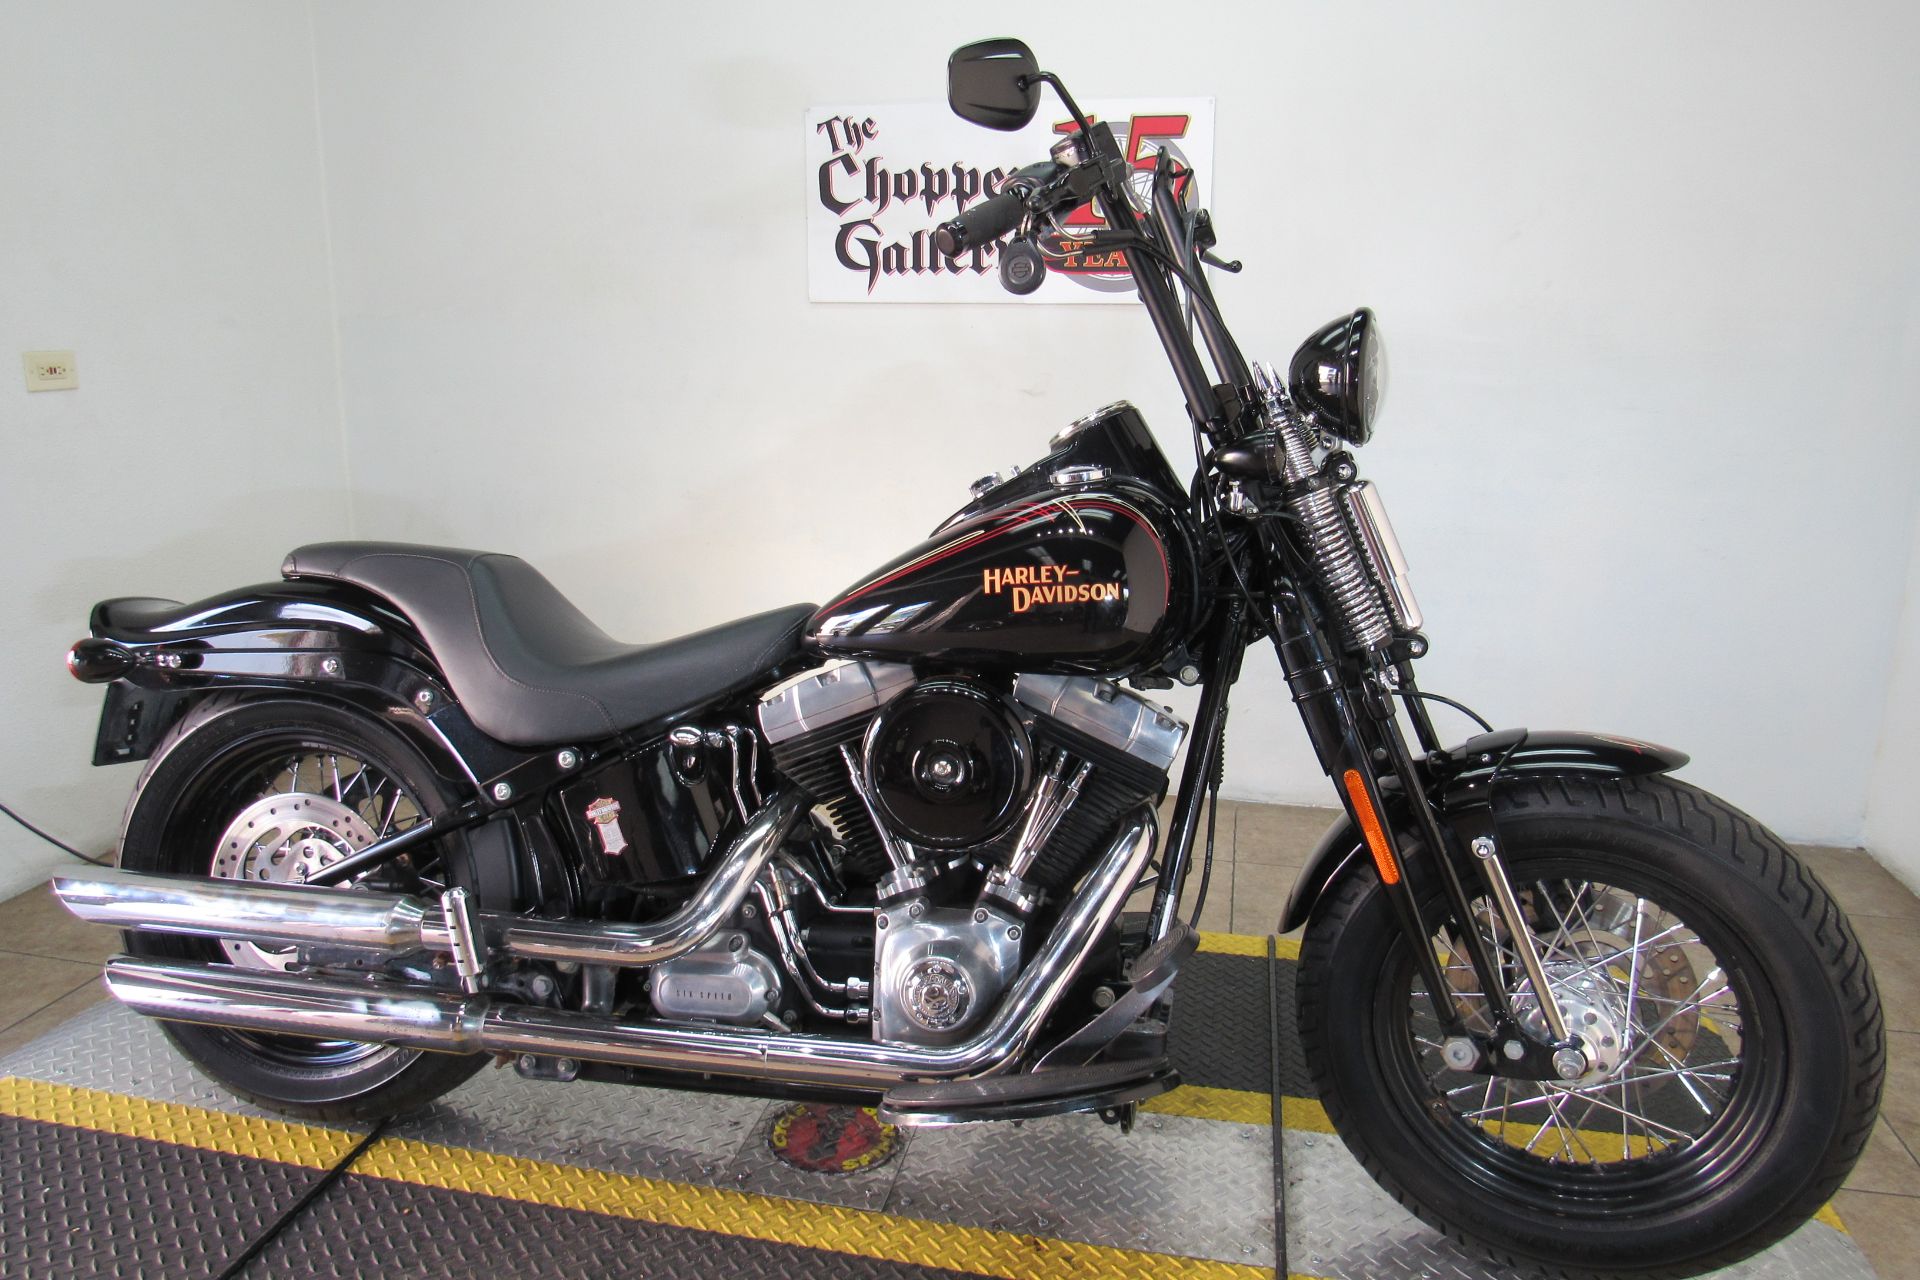 2008 Harley-Davidson Softail® Cross Bones™ in Temecula, California - Photo 3